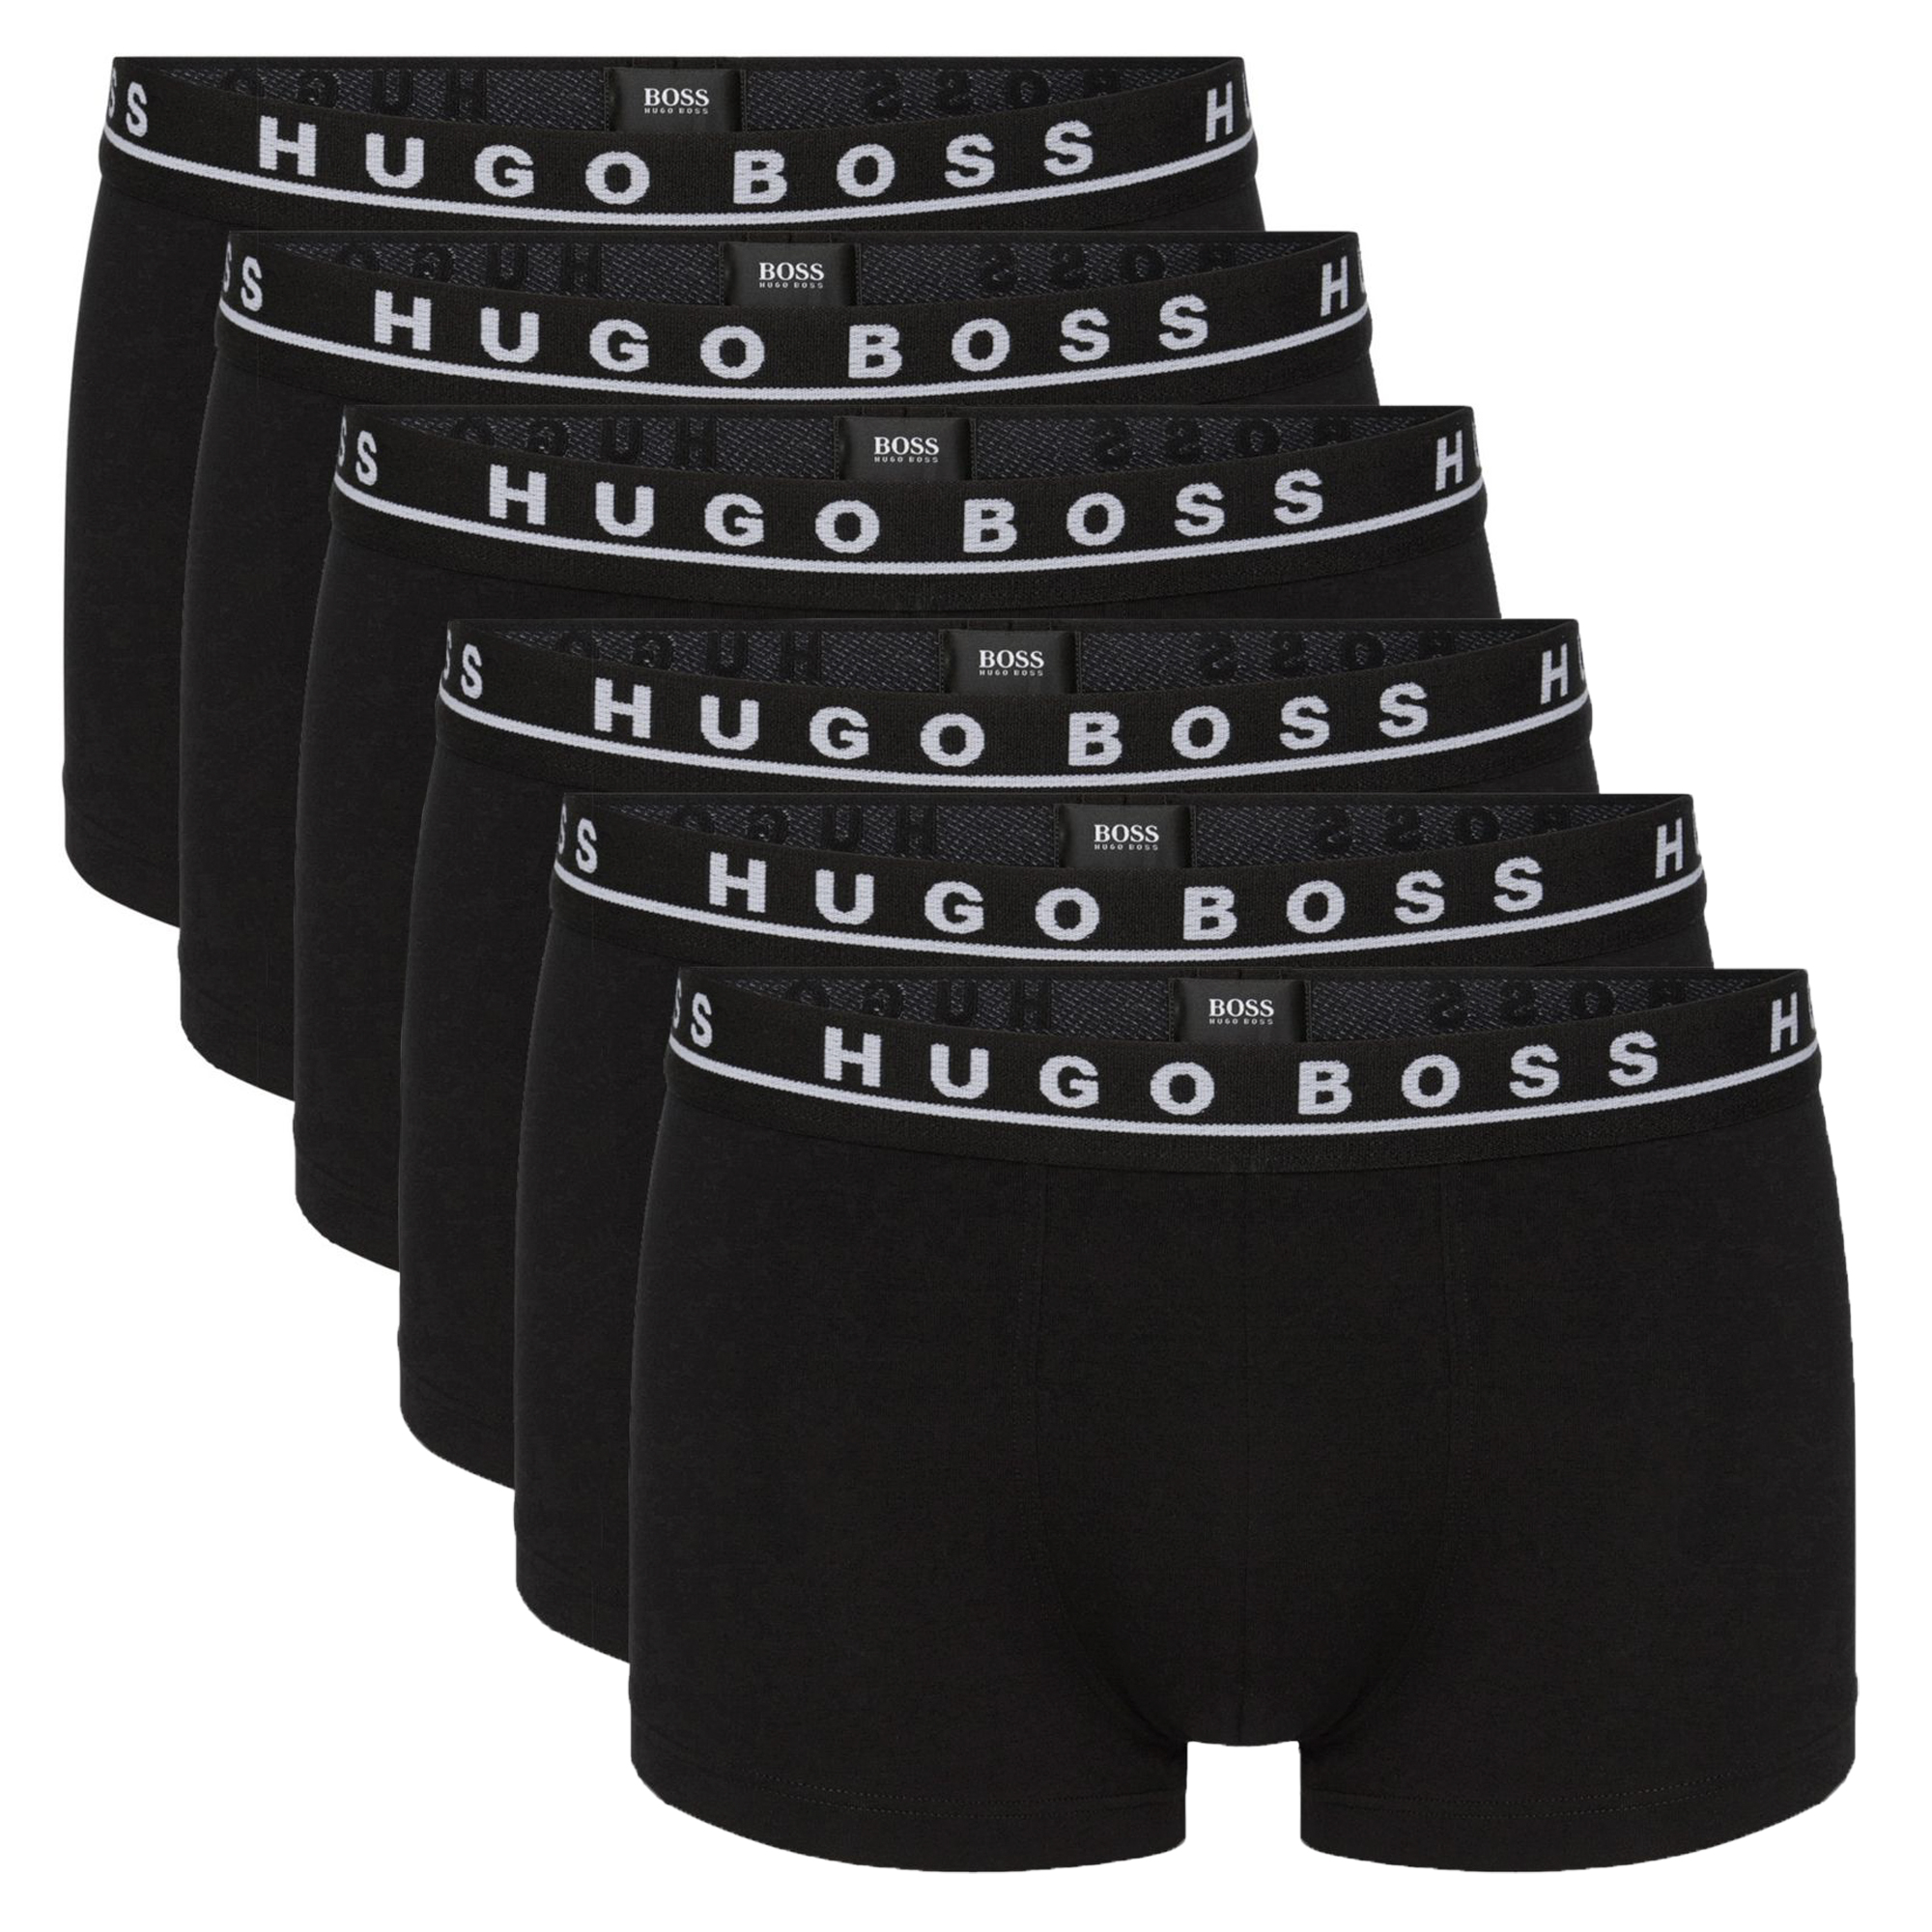 Boxer-short Hugo Boss (Lot de 6)